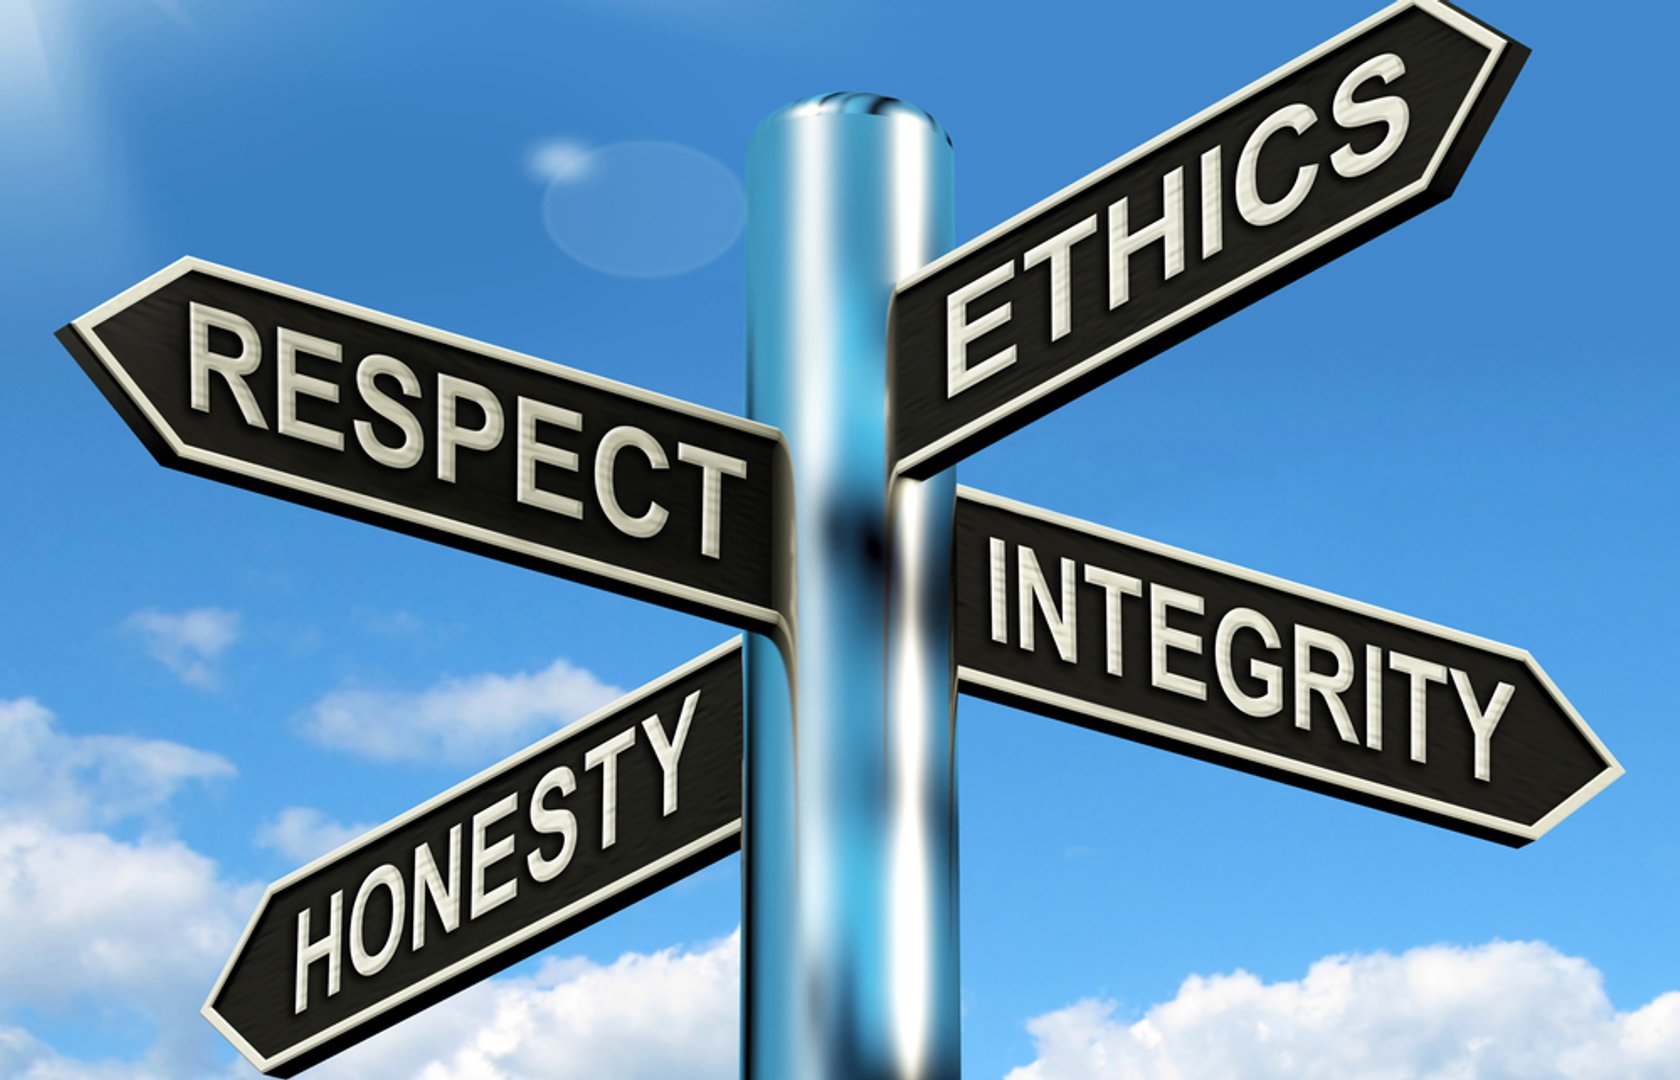 Ethical Marketing, Quality over Quantity